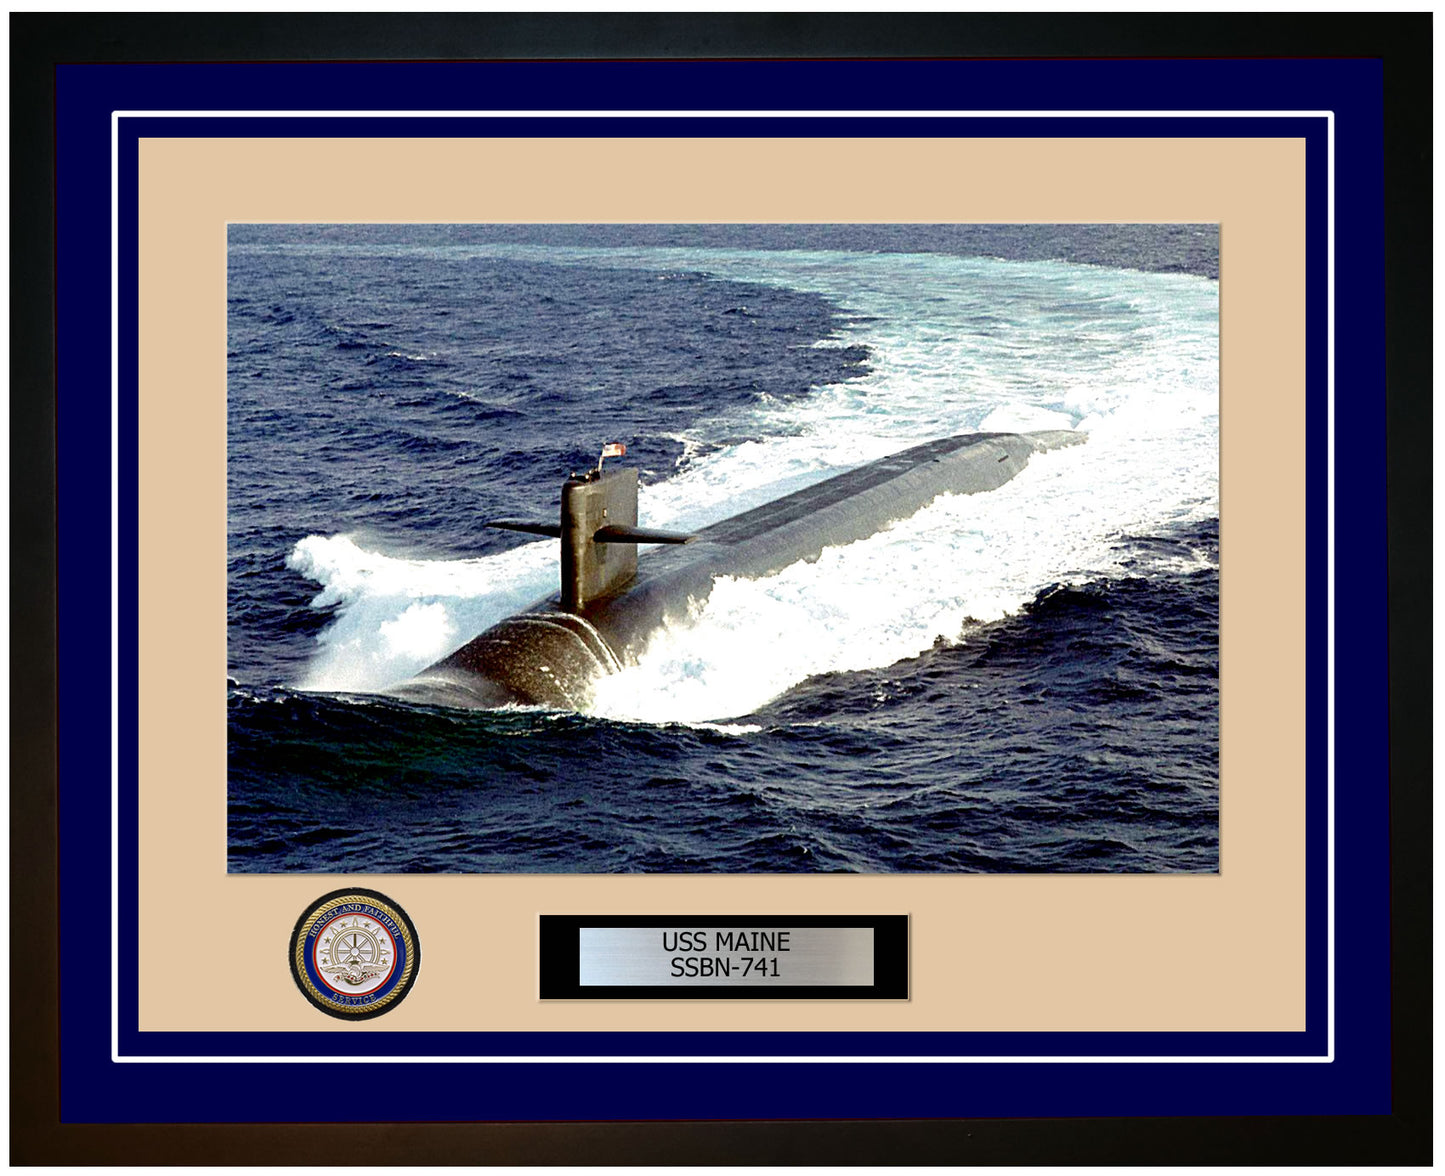 USS Maine SSBN-741 Framed Navy Ship Photo Blue